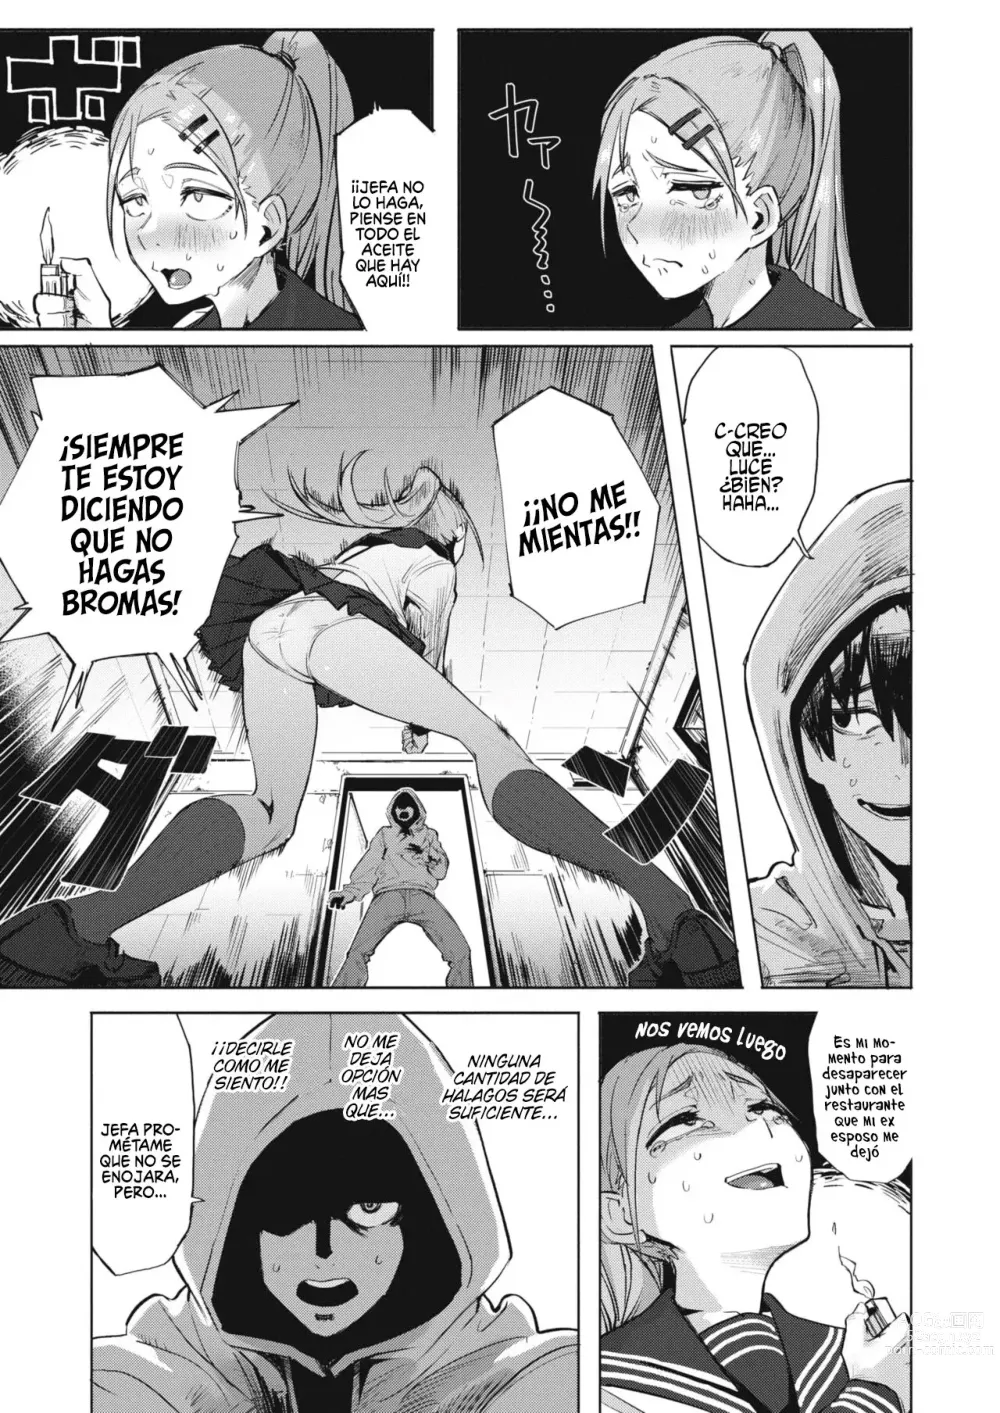 Page 3 of doujinshi Estas exagerando abuela!